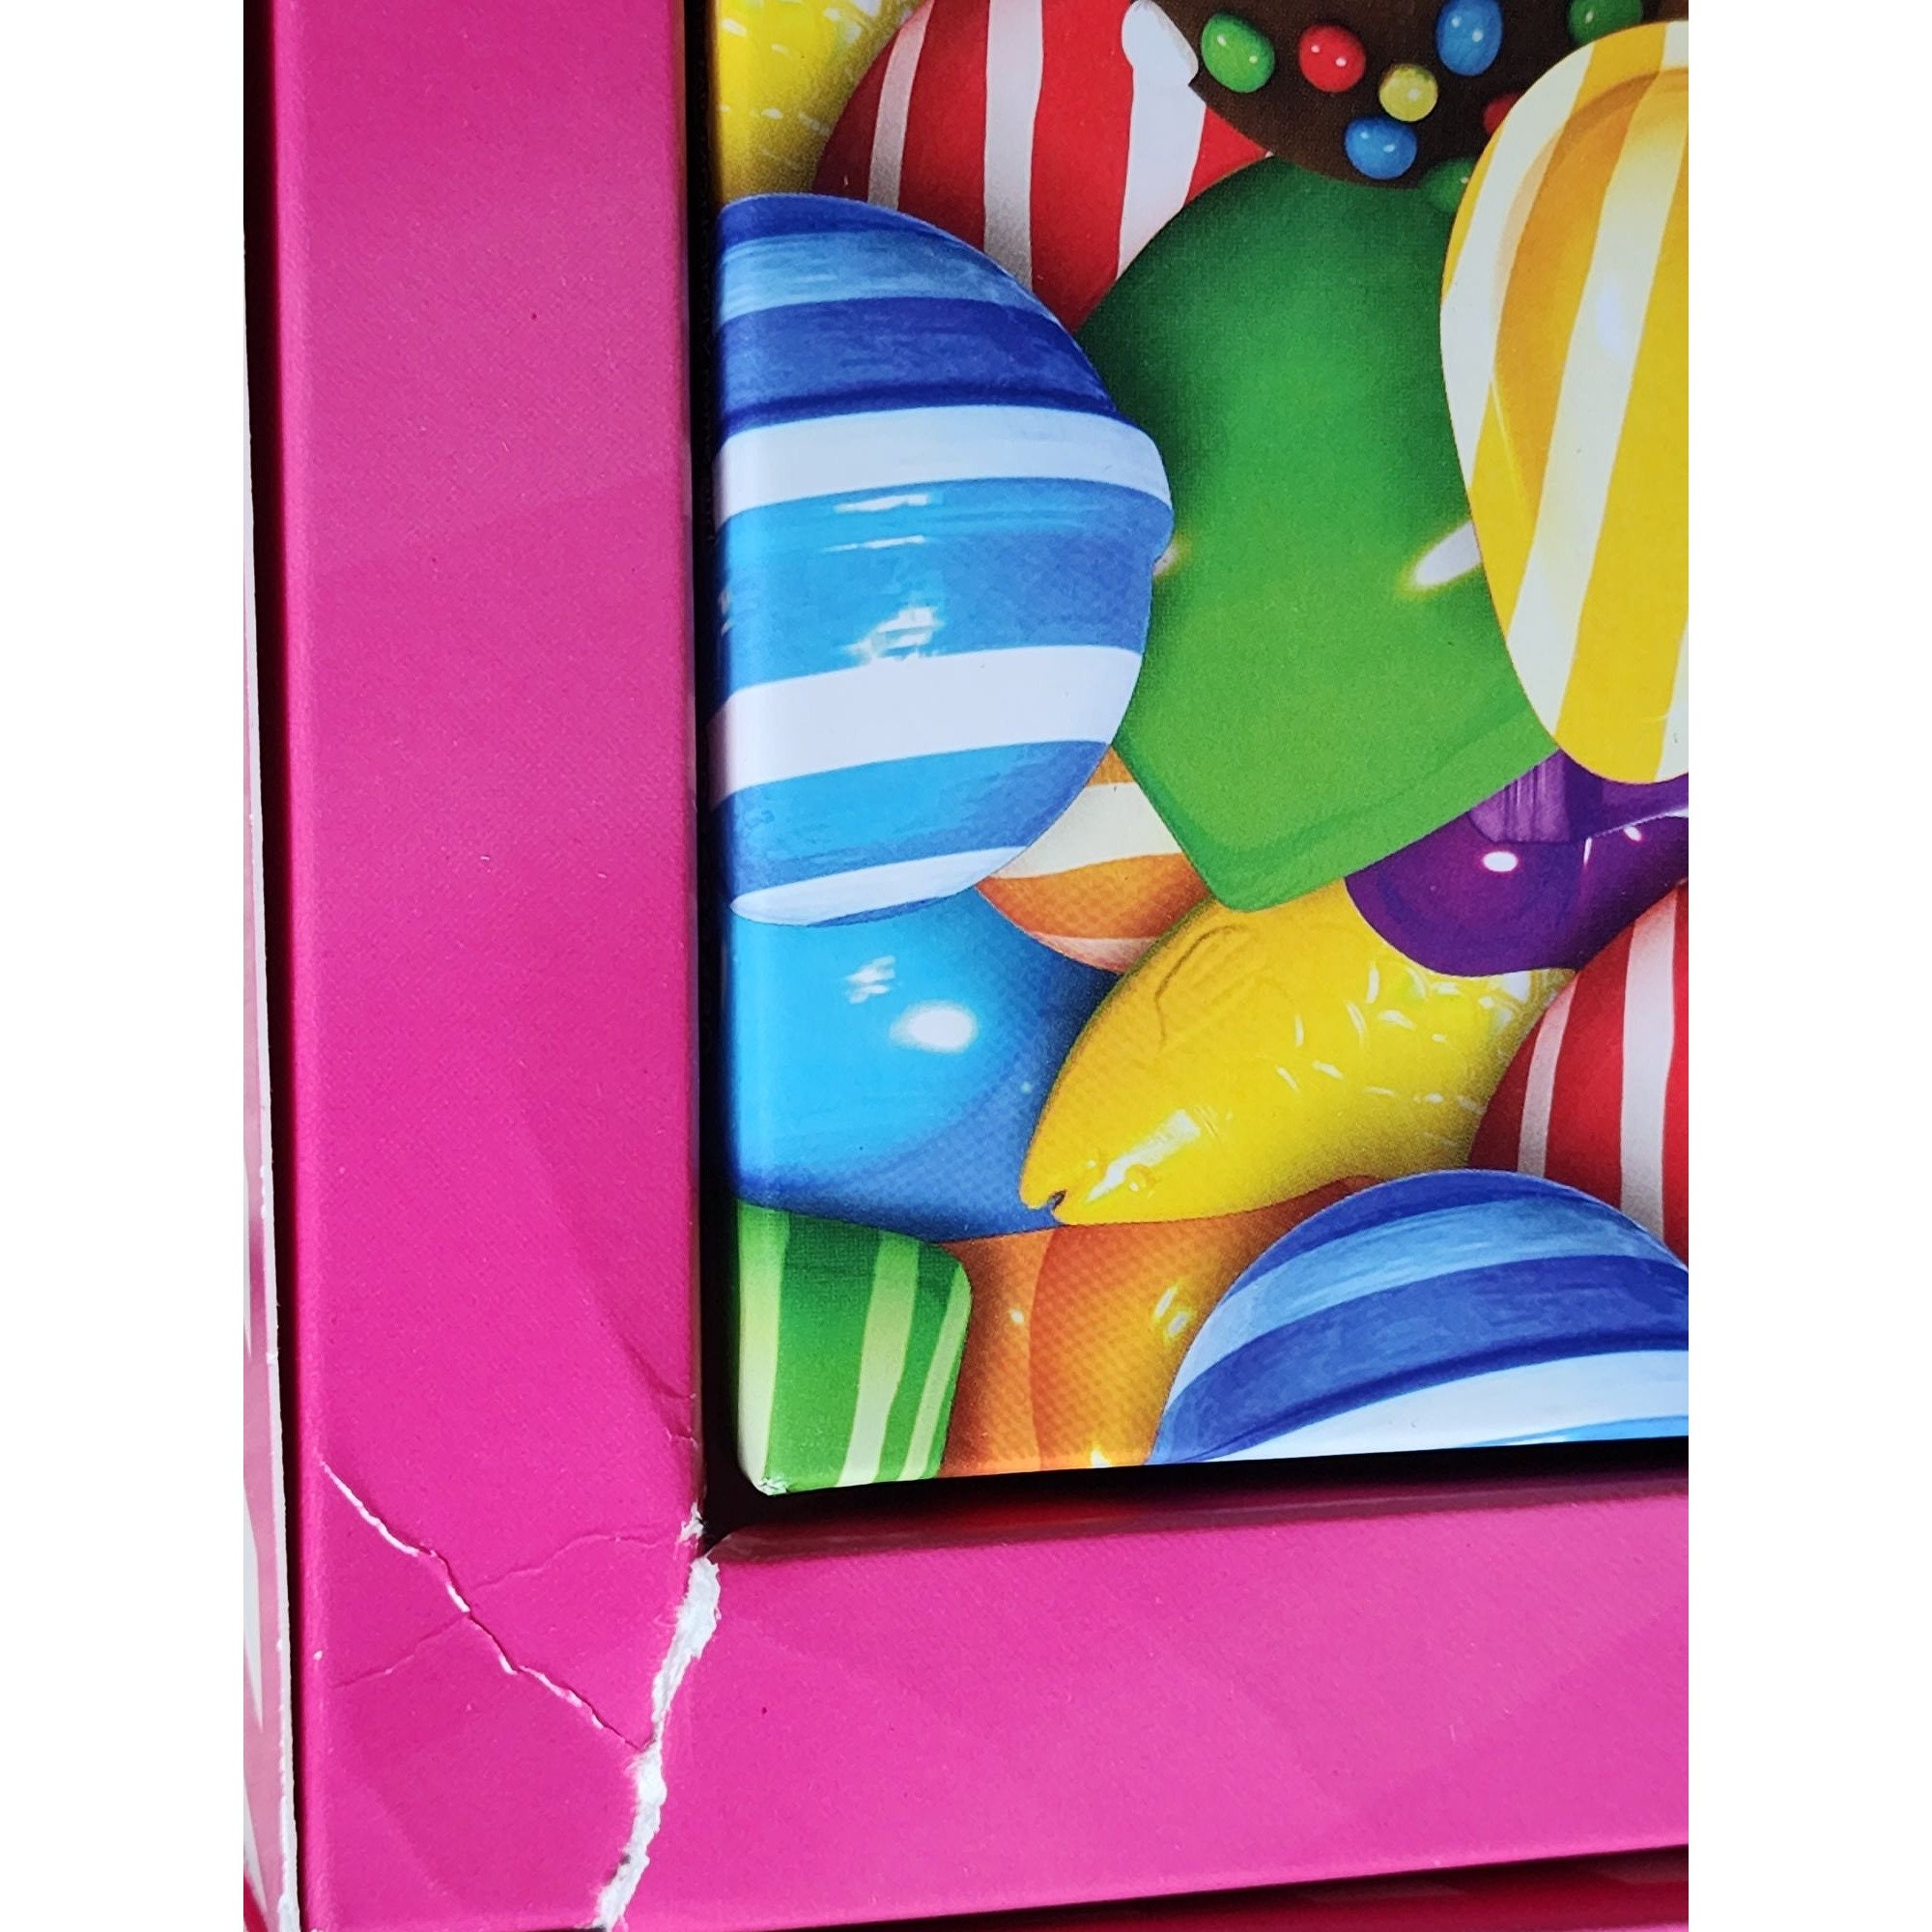 New Gift Box Candy Crush Soda Saga Monopoly Board Game Fun Joy Happy Times